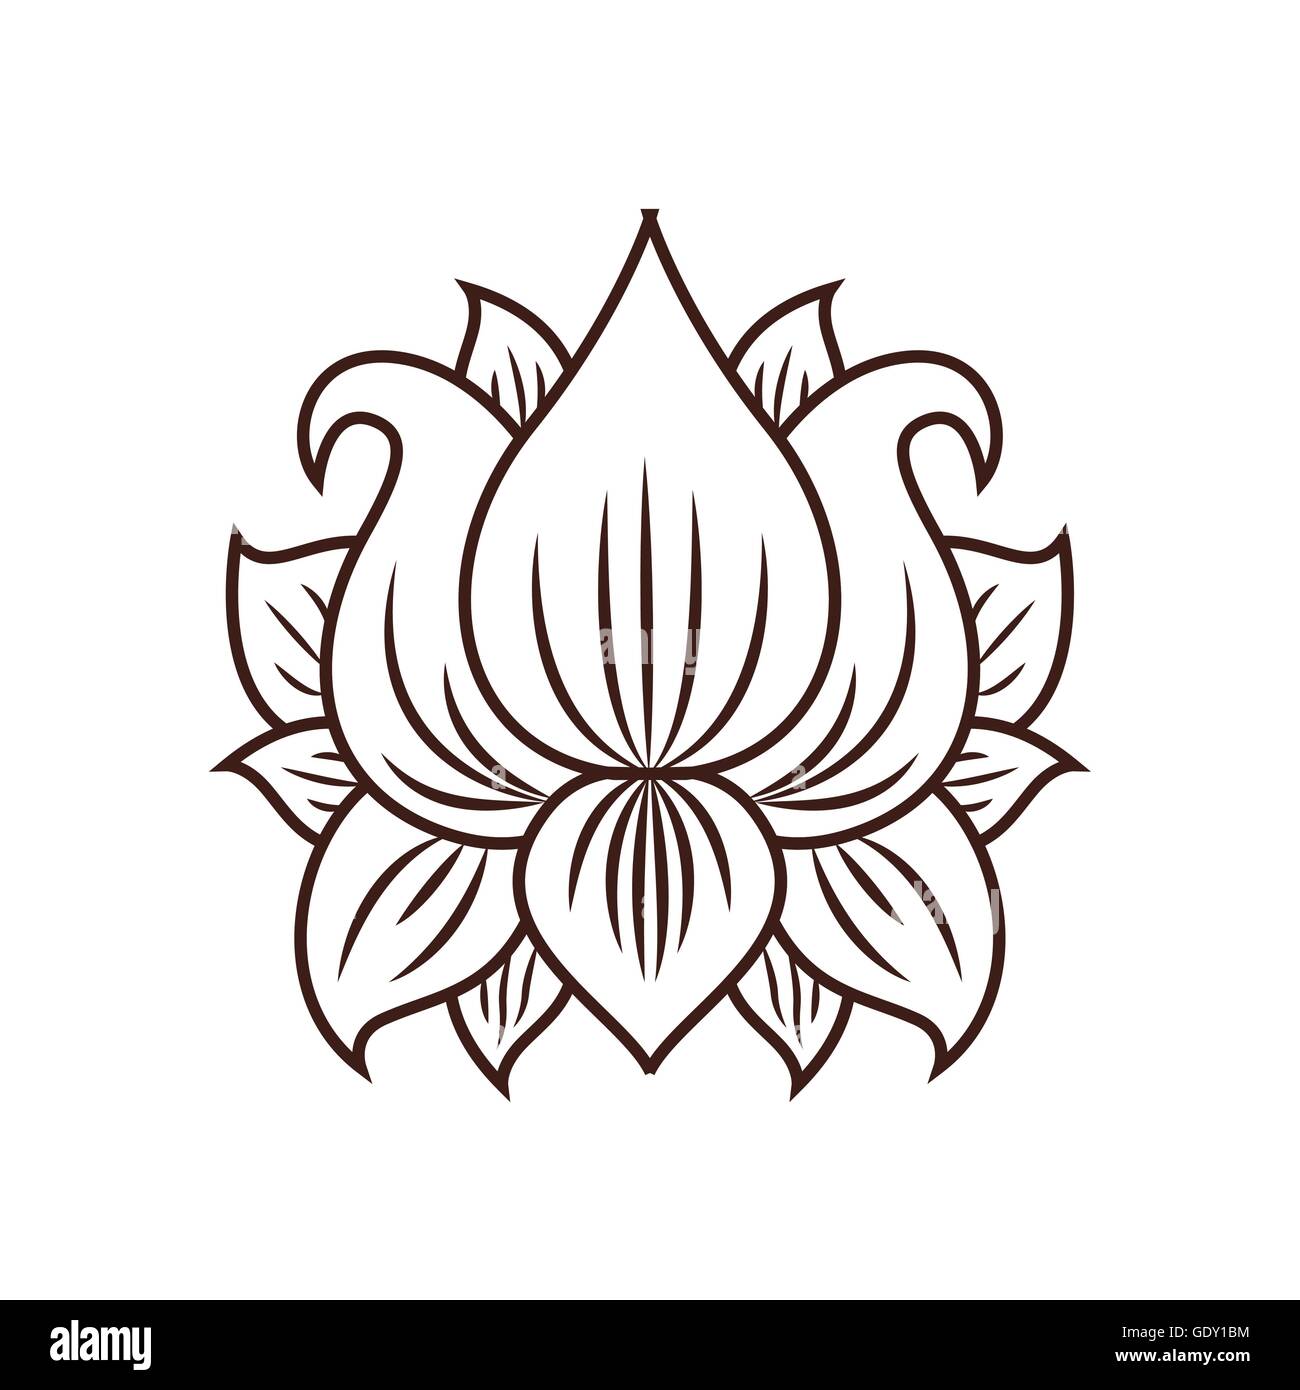 Flower Border Drawing | Design Bundles-saigonsouth.com.vn